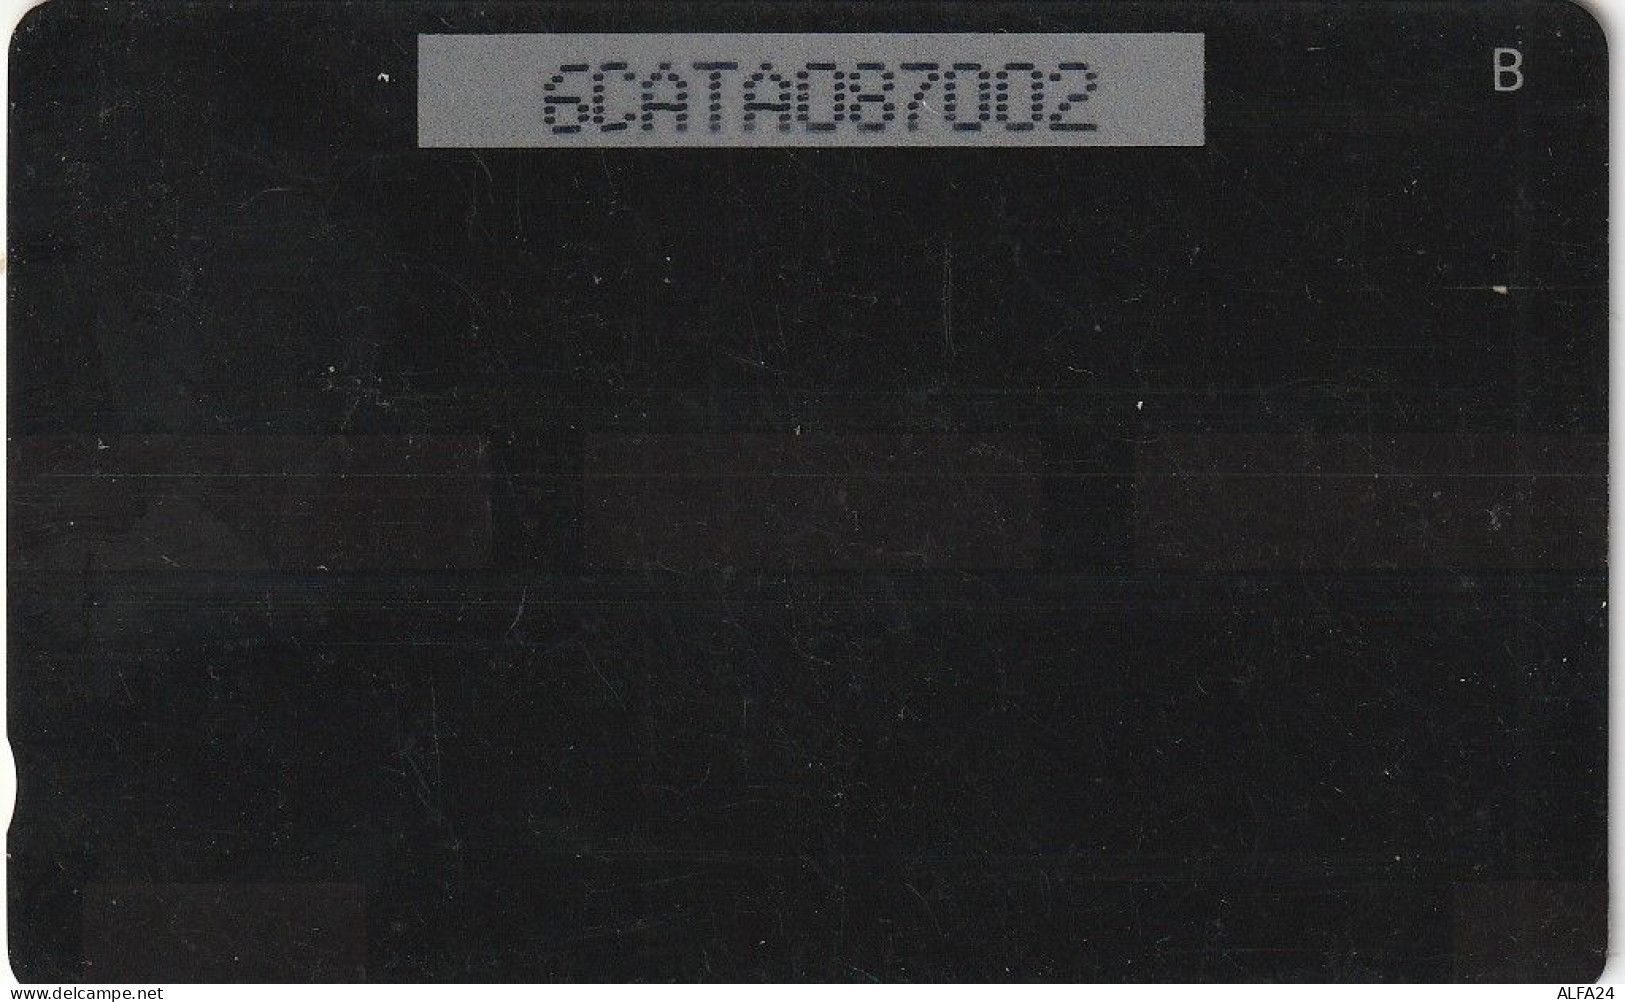 PHONE CARD ANTIGUA BARBUDA  (E1.21.2 - Antigua Et Barbuda